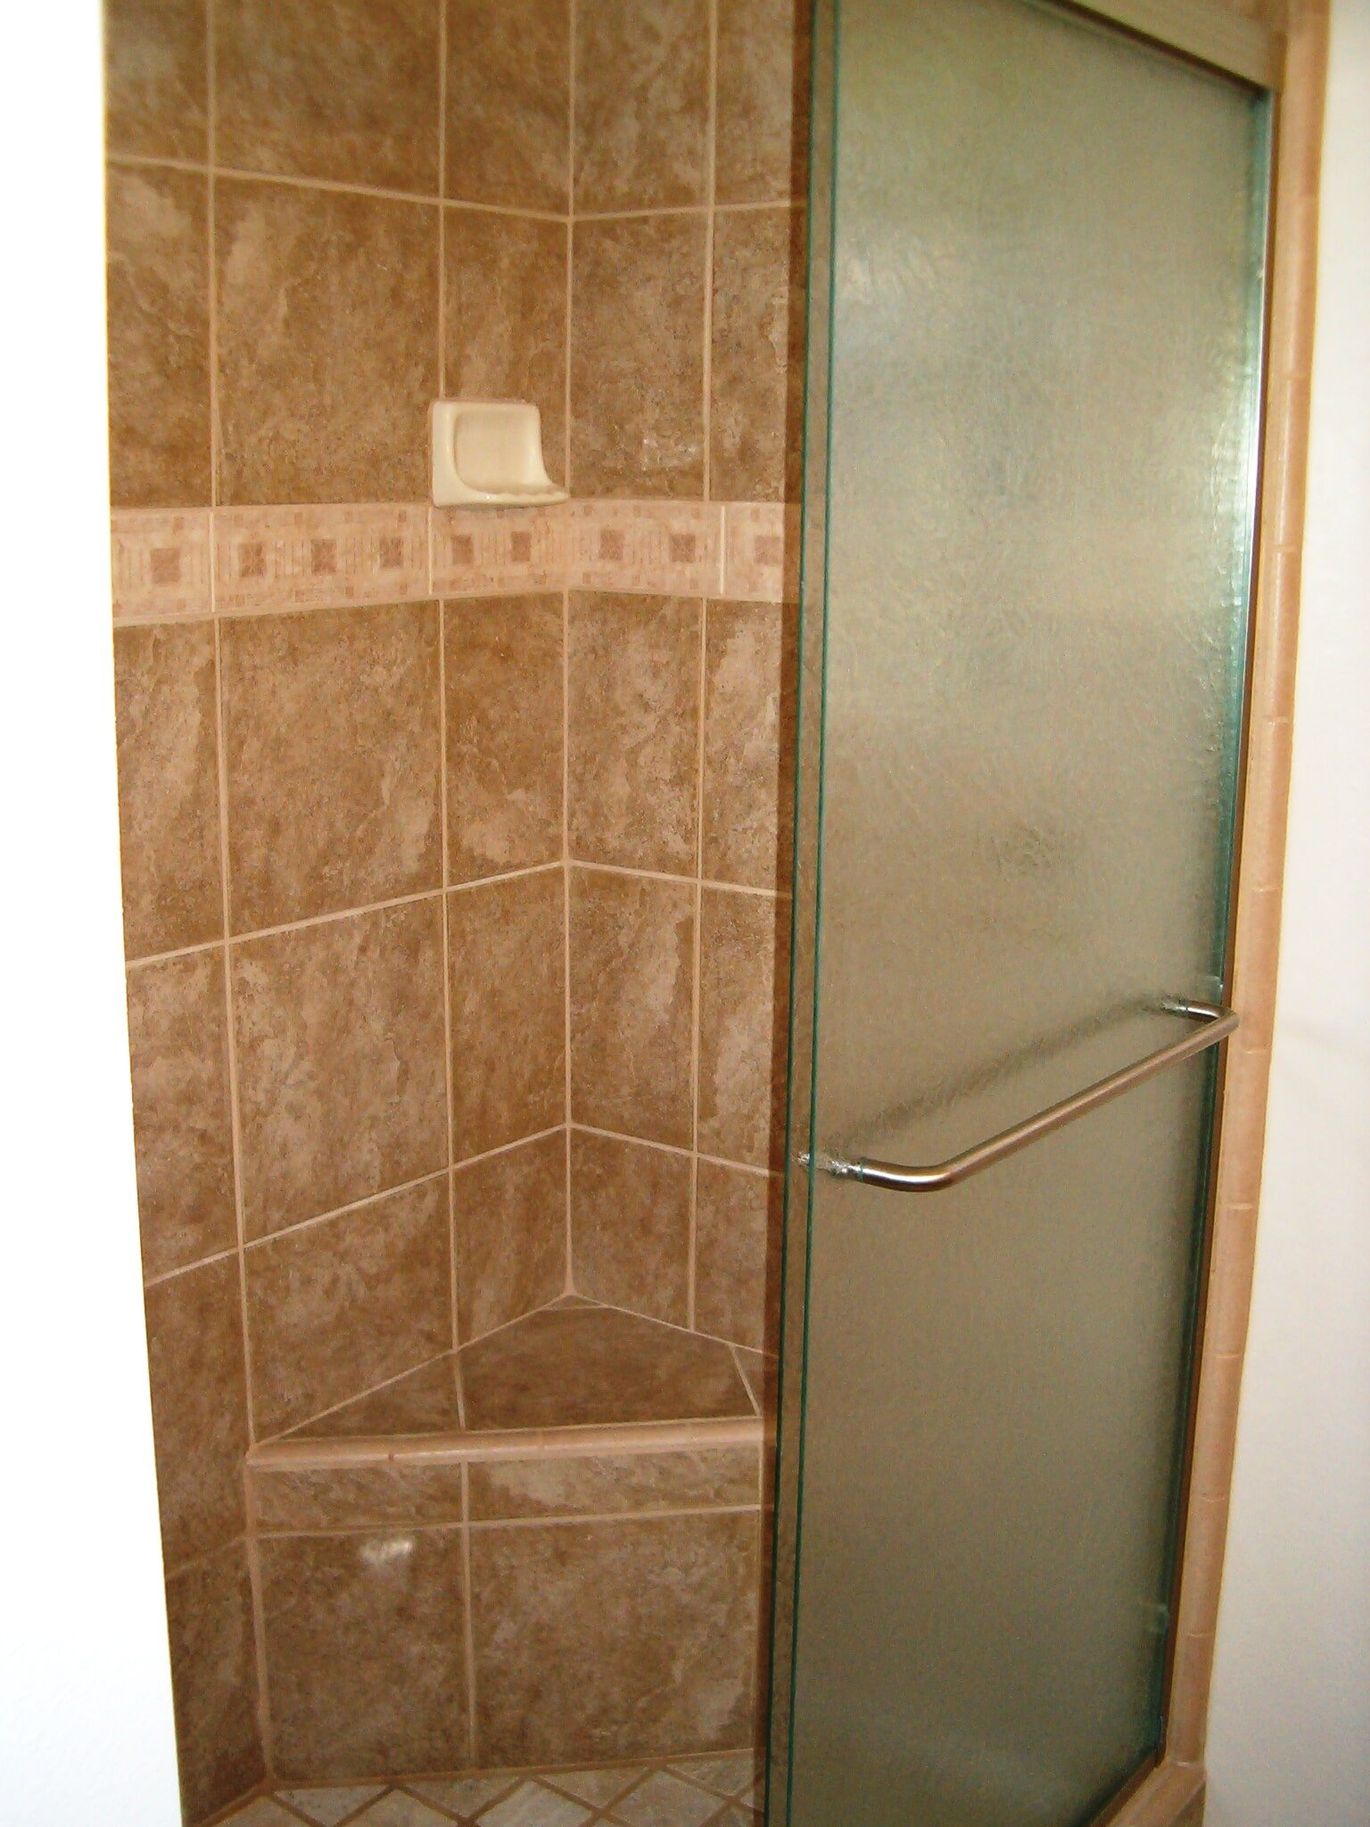 Tile shower with corner seat Remodel Surprise AZ 2